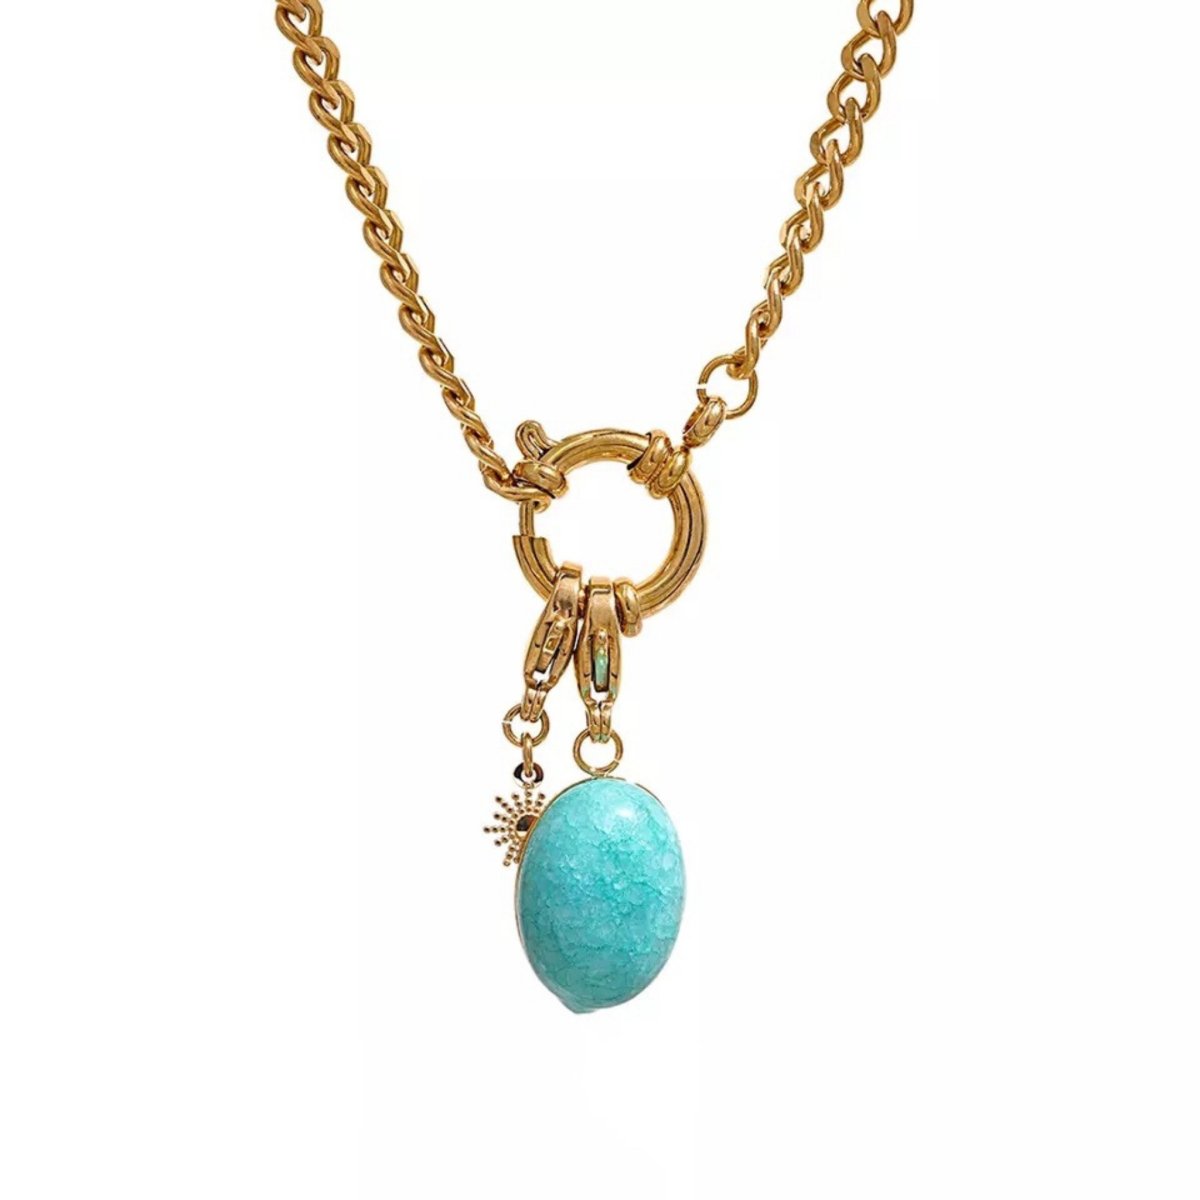 The Sea Turquoise Charm Necklace - C.J.ROCKER